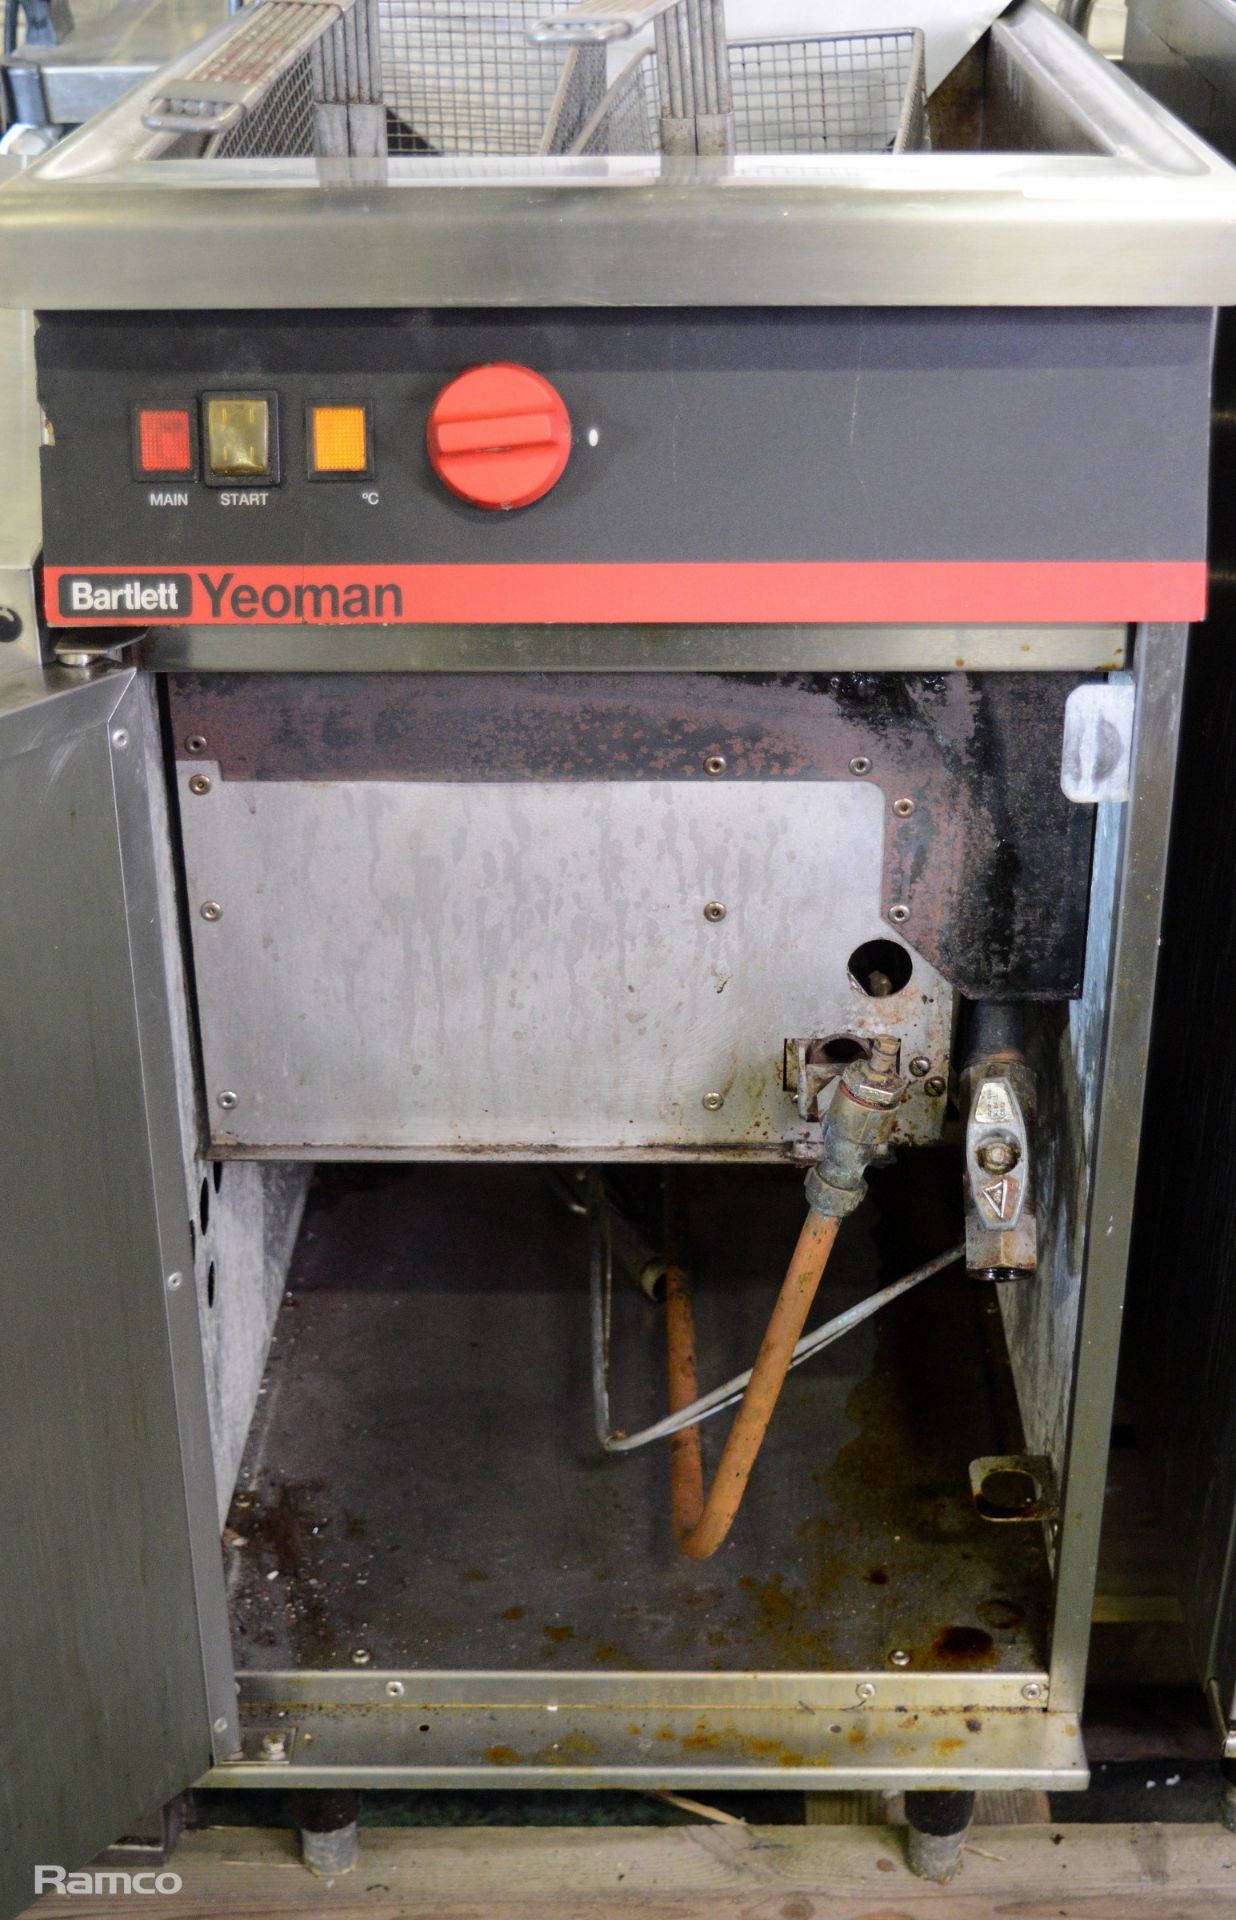 Bartlett Yeoman single gas fryer - 76x46x107cm - Image 5 of 6